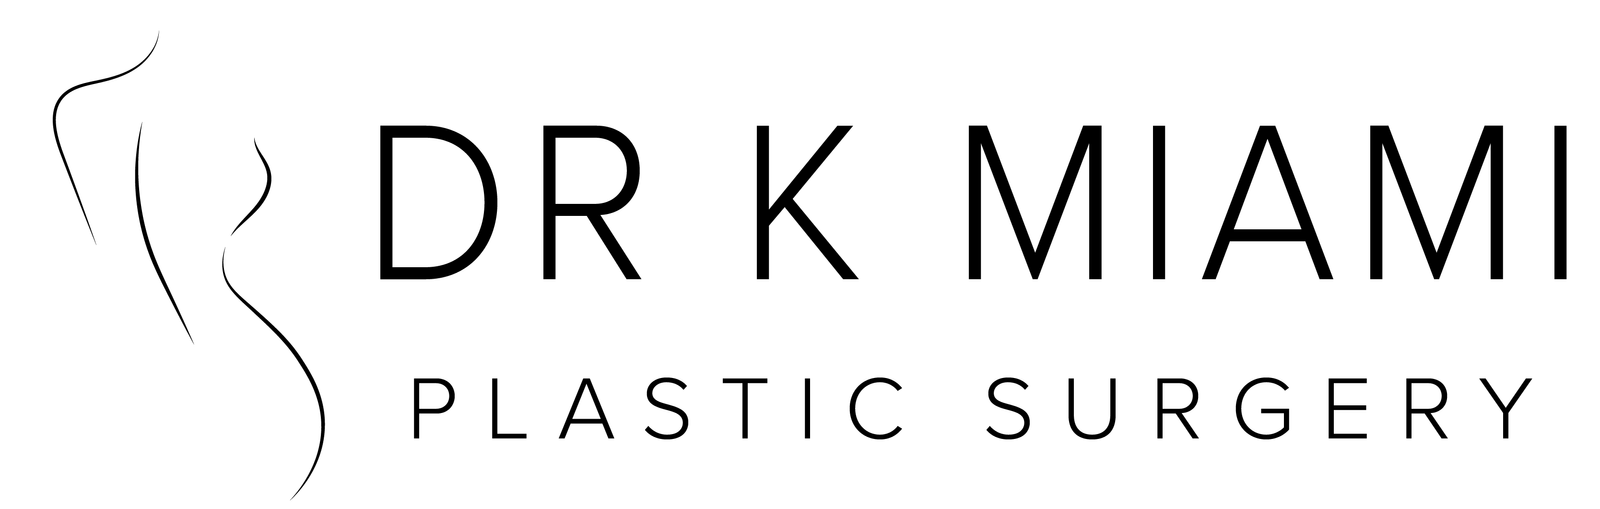 Dr K Miami Plastic Surgery